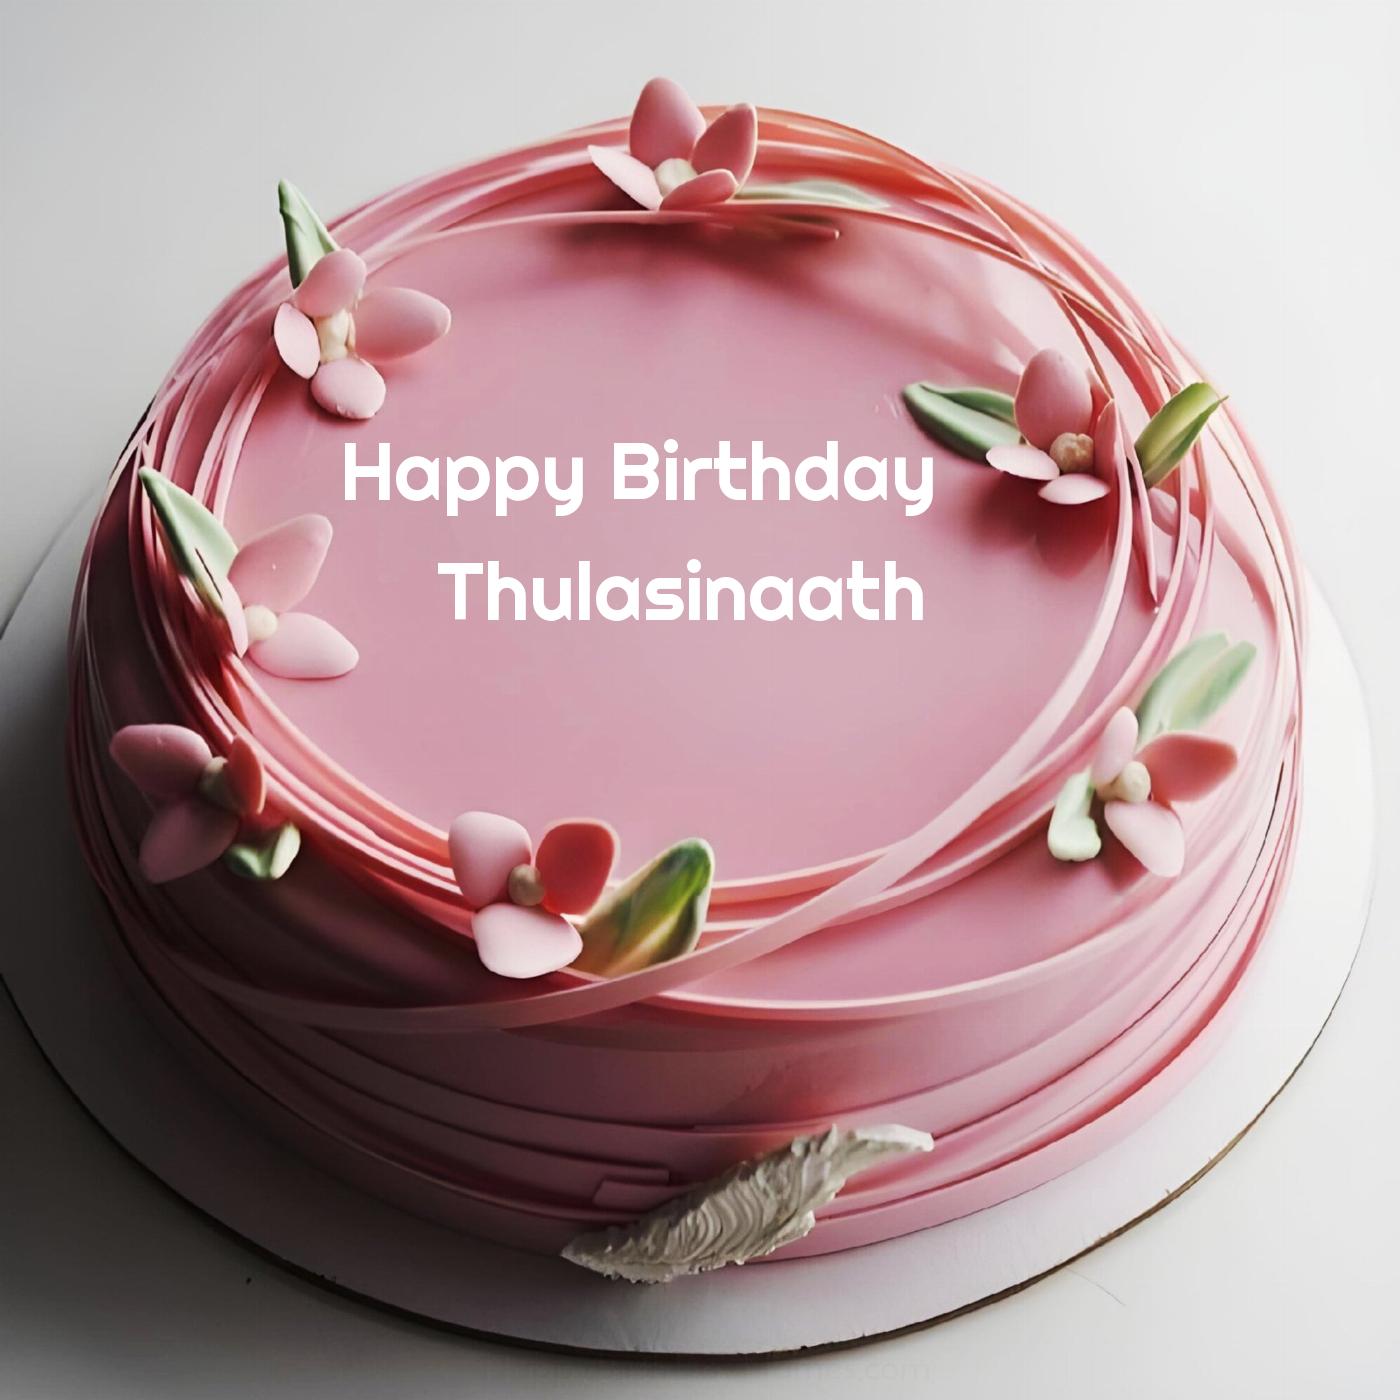 Happy Birthday Thulasinaath Pink Flowers Cake